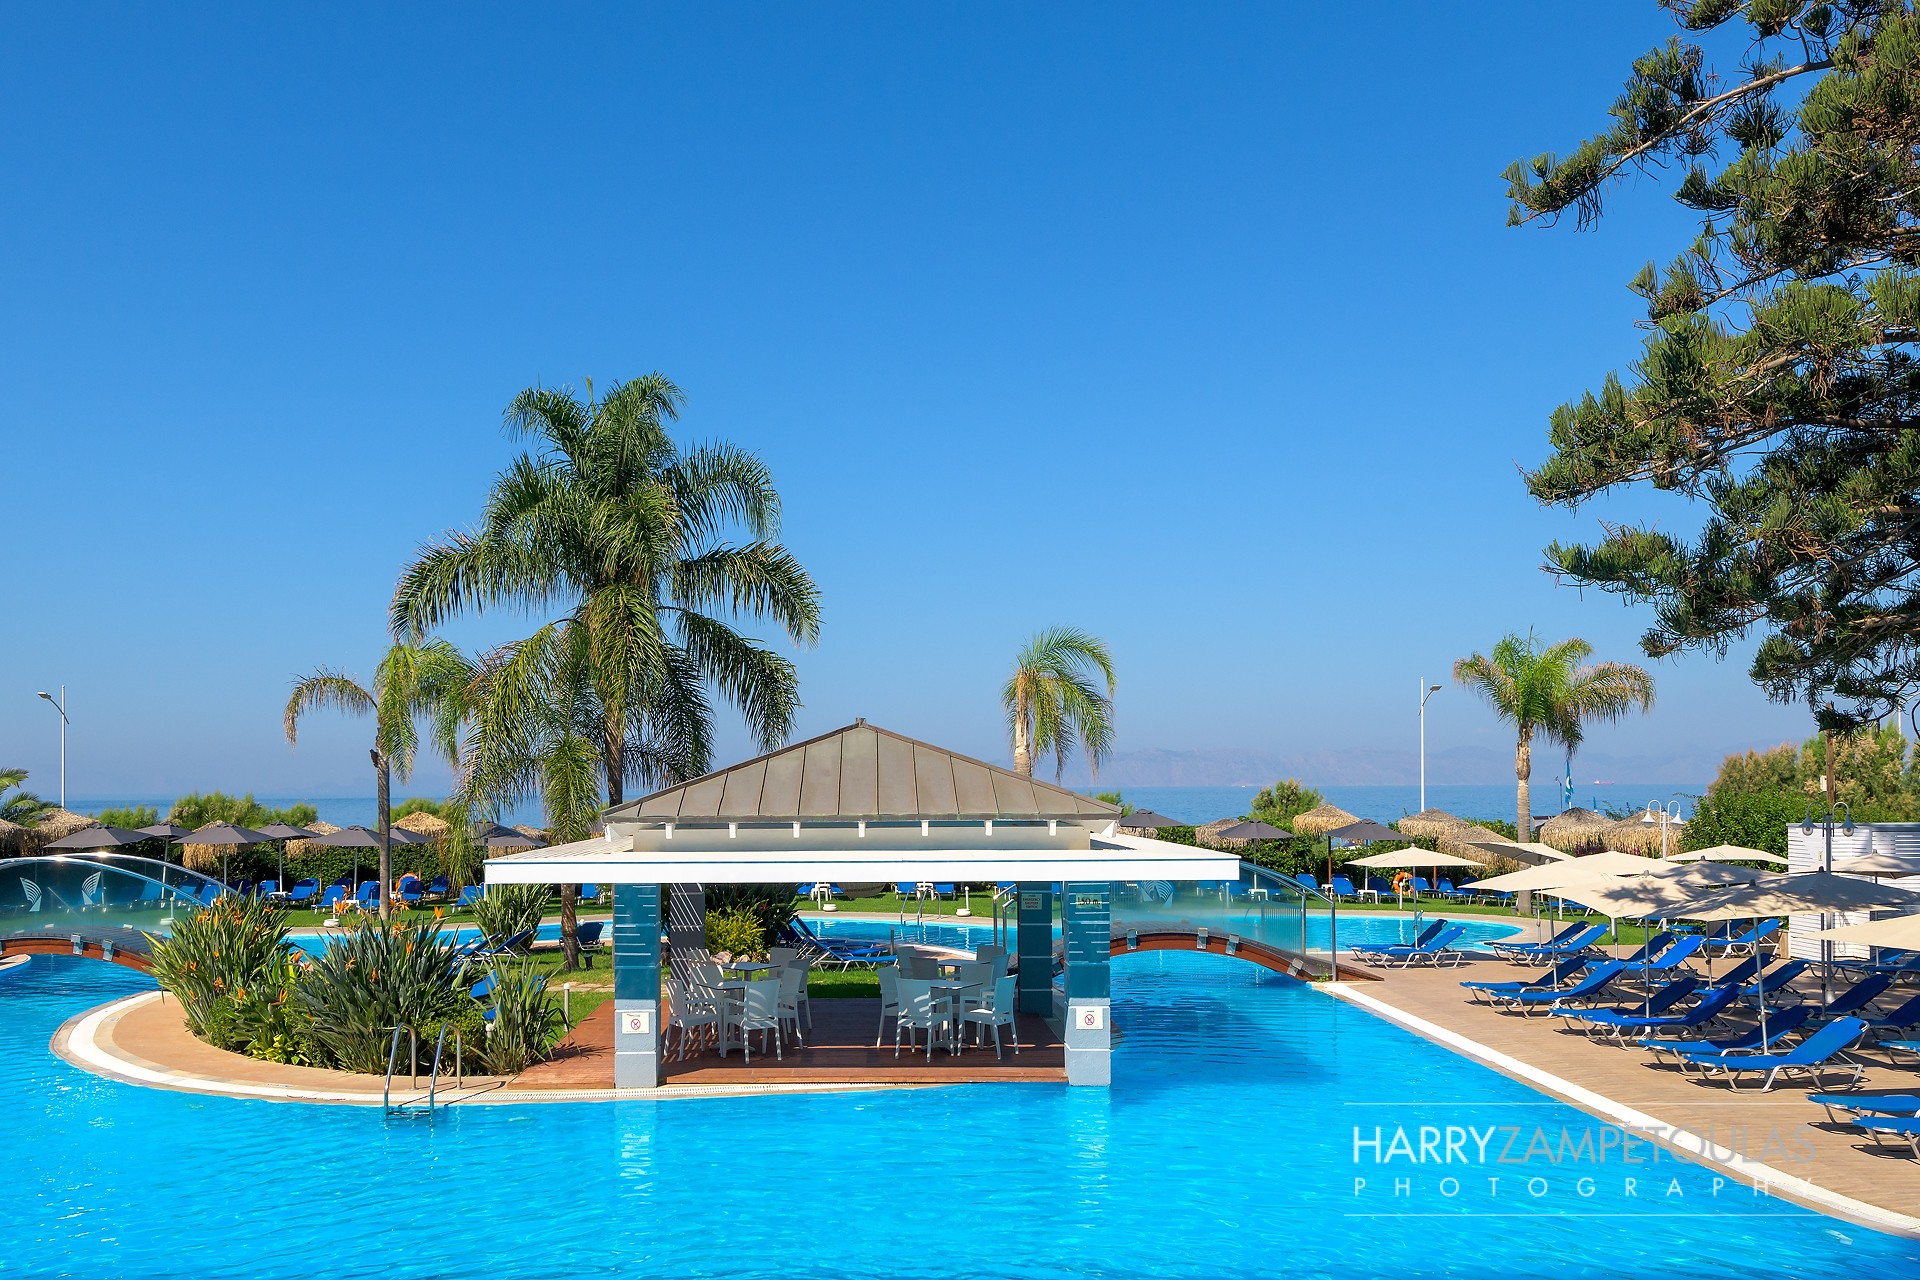 Oceanis-Hotel-Rhodes-Harry-Zampetoulas-Photography-21 Oceanis Hotel Rhodes - Hotel Photography 